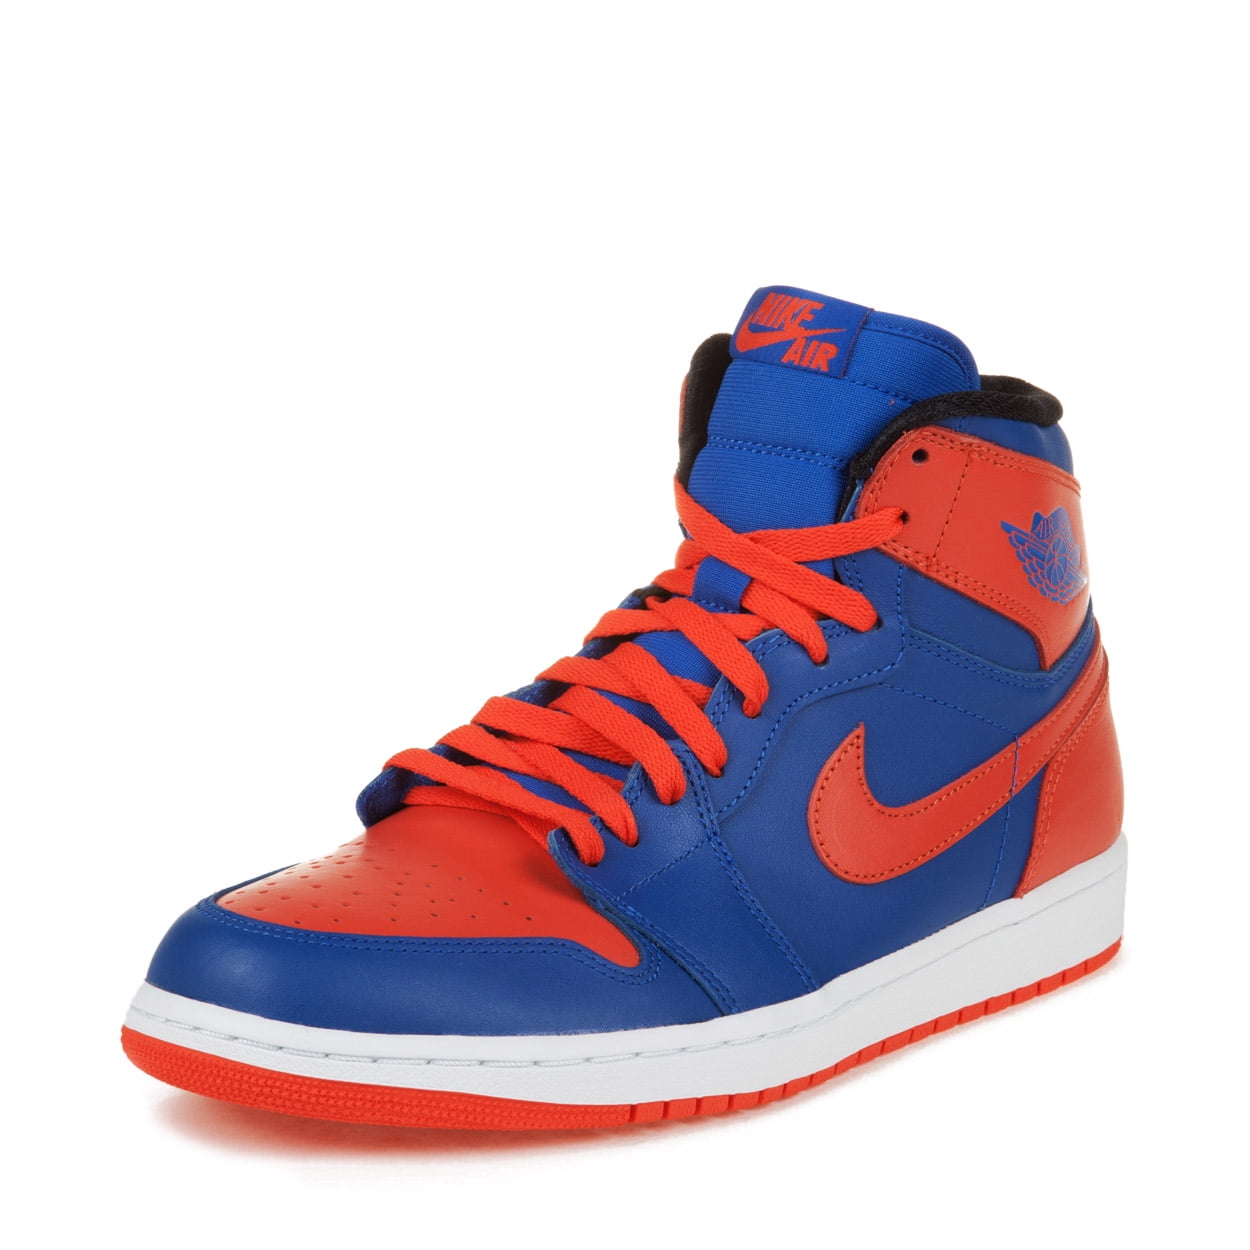 Available Now] Buy New Air Jordan 1 Mid Blue Orange Knicks